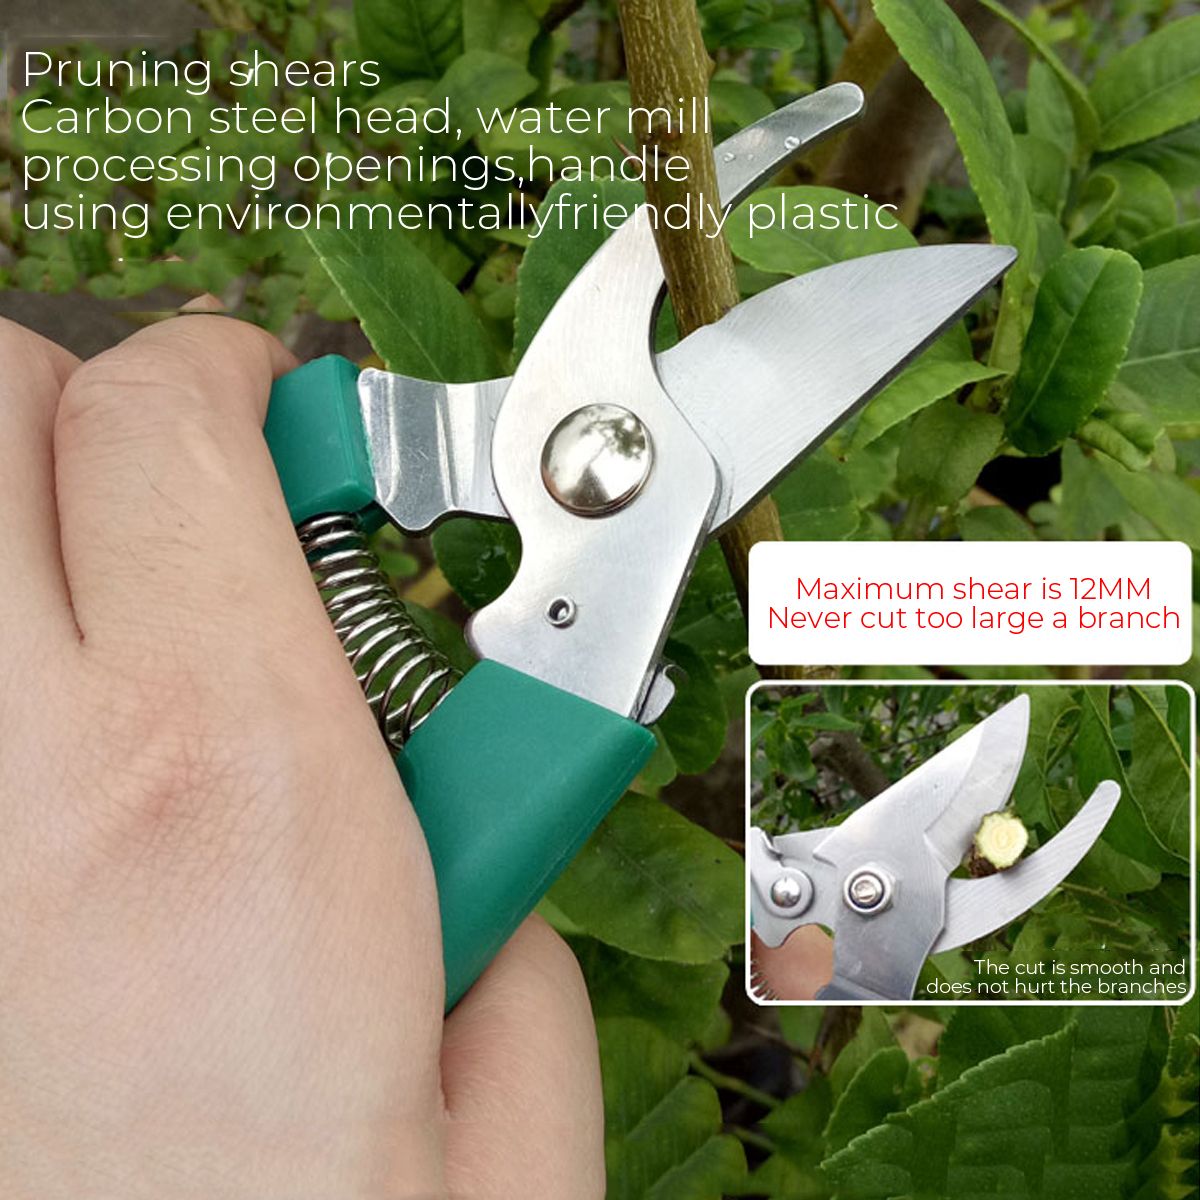 5PCS-Gardening-Tools-Set-Gifts-Ergonomic-Non-Slip-Handle-Garden-Hand-Tool-Set-1693499